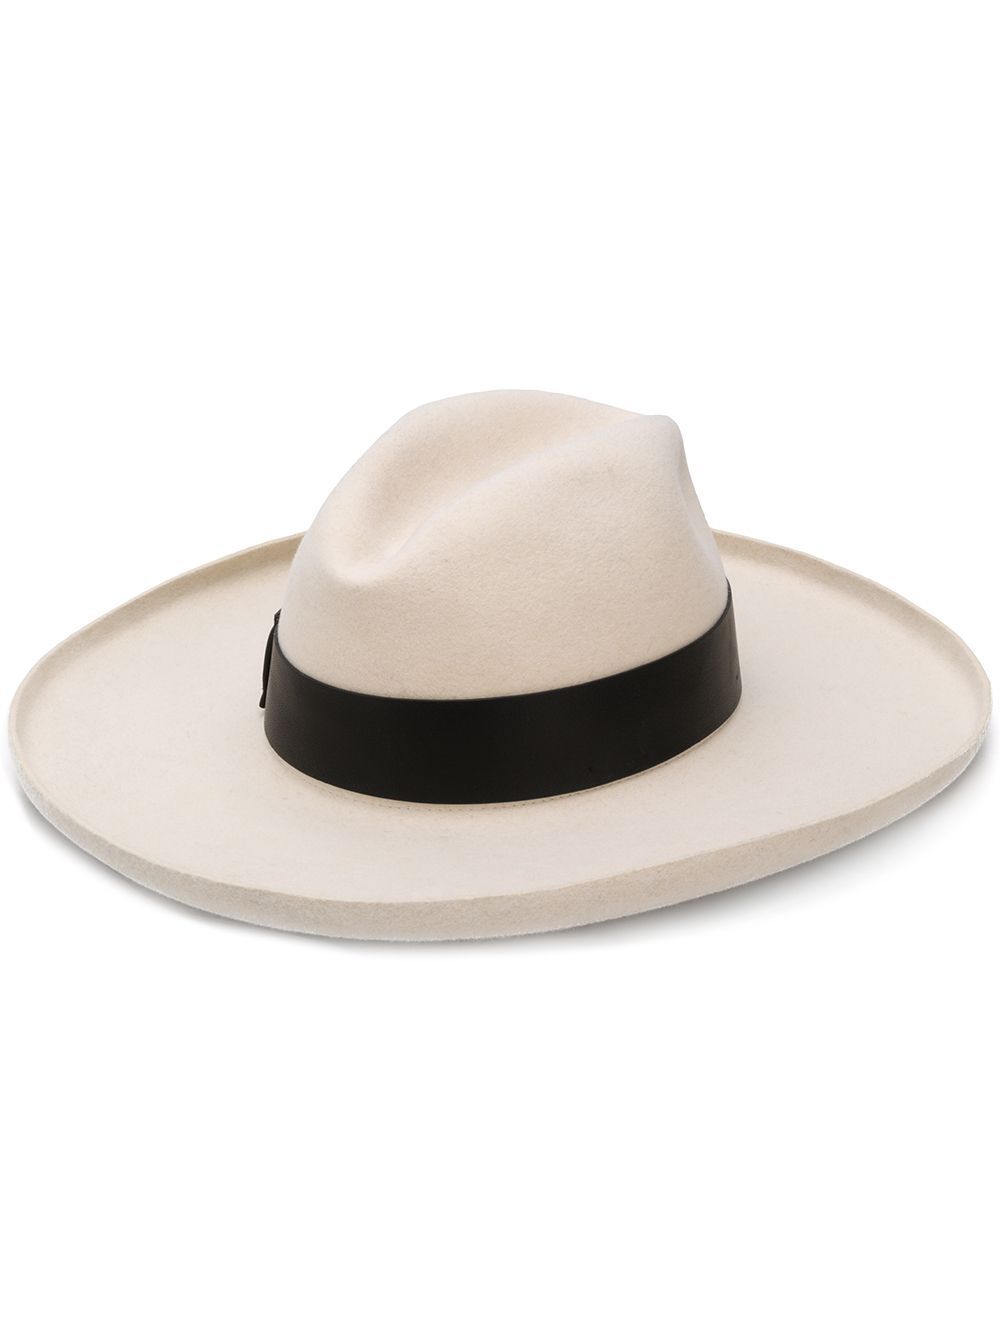 Borsalino wide brimmed hat - White | FarFetch Global